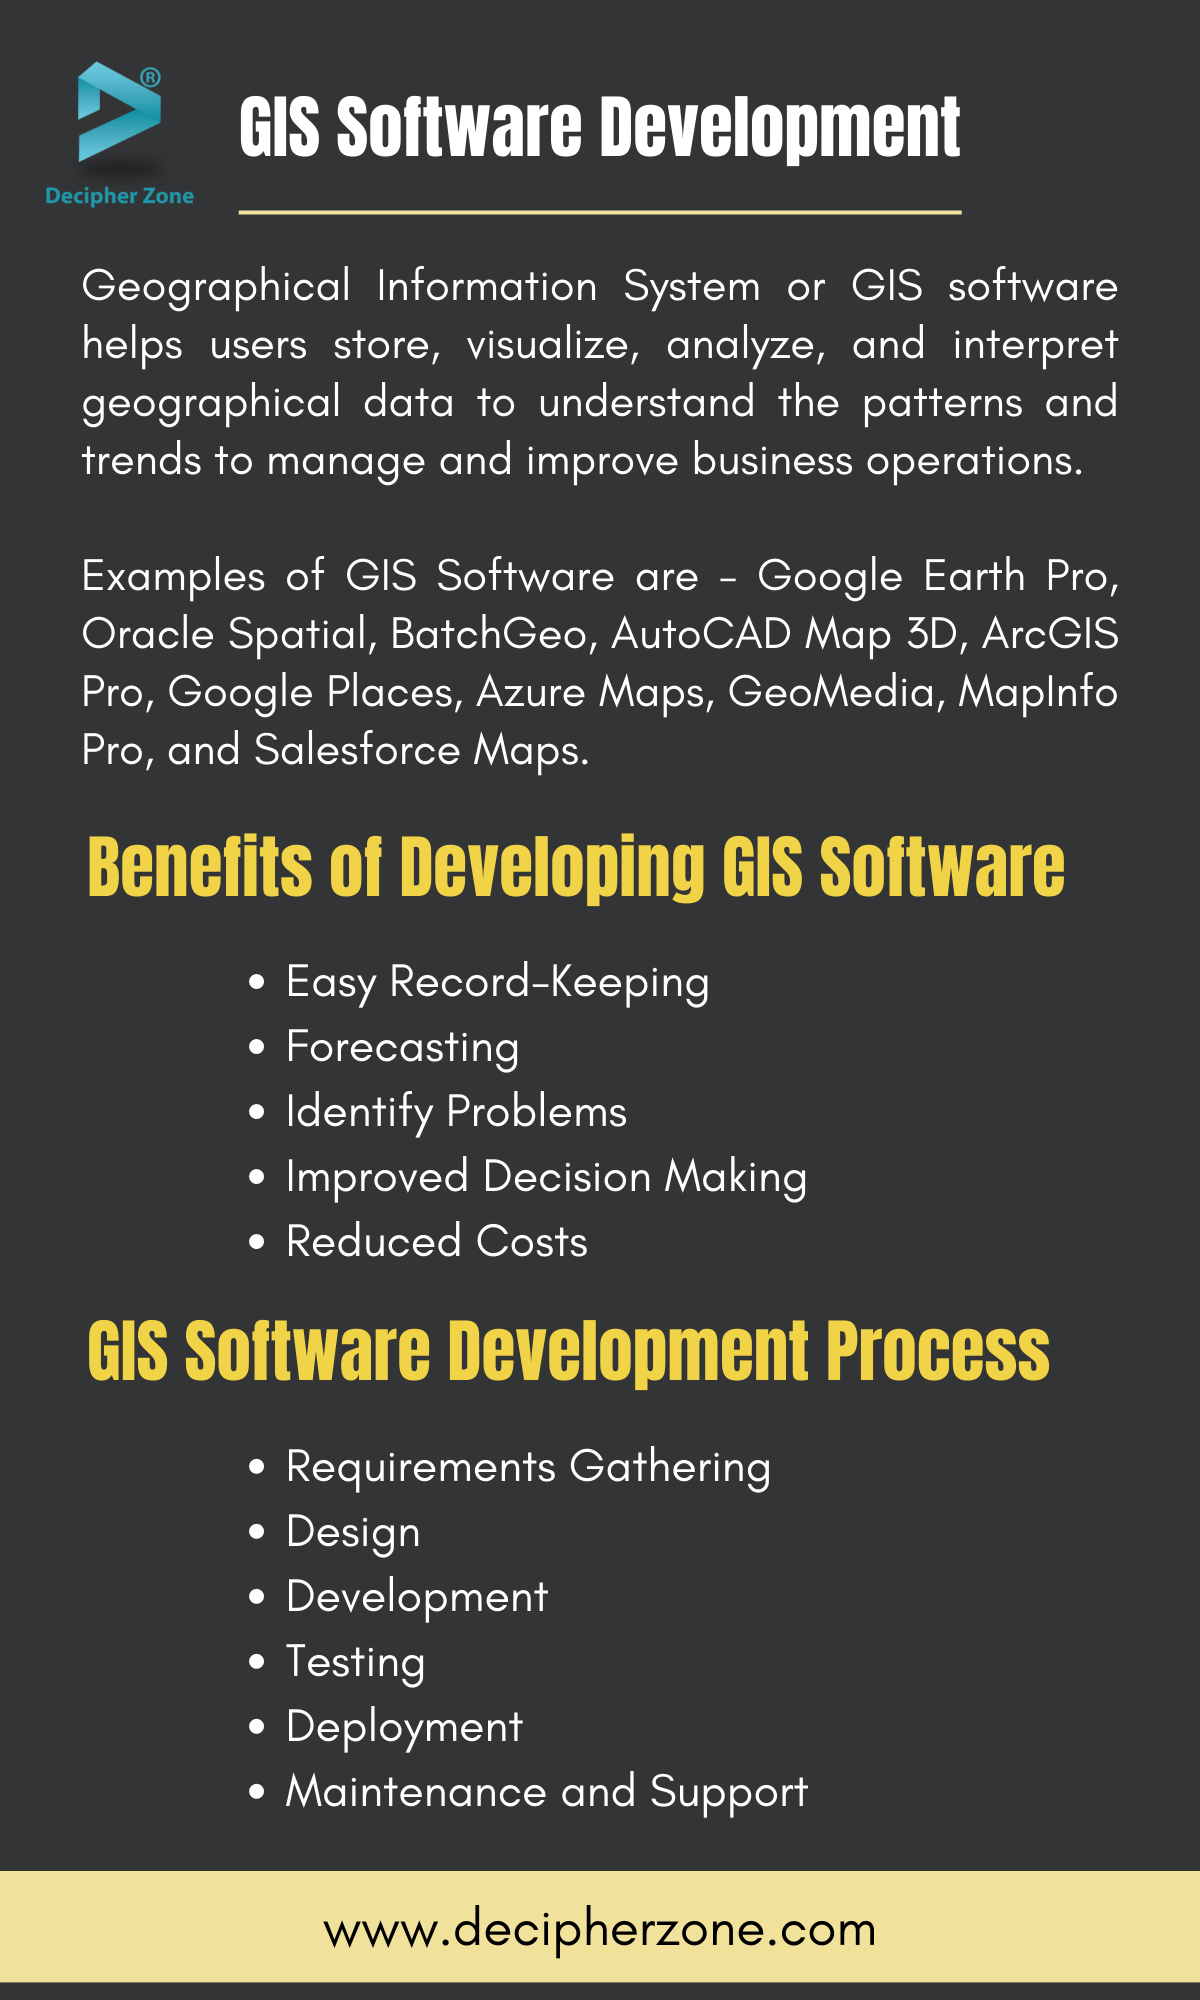 GIS Software Development